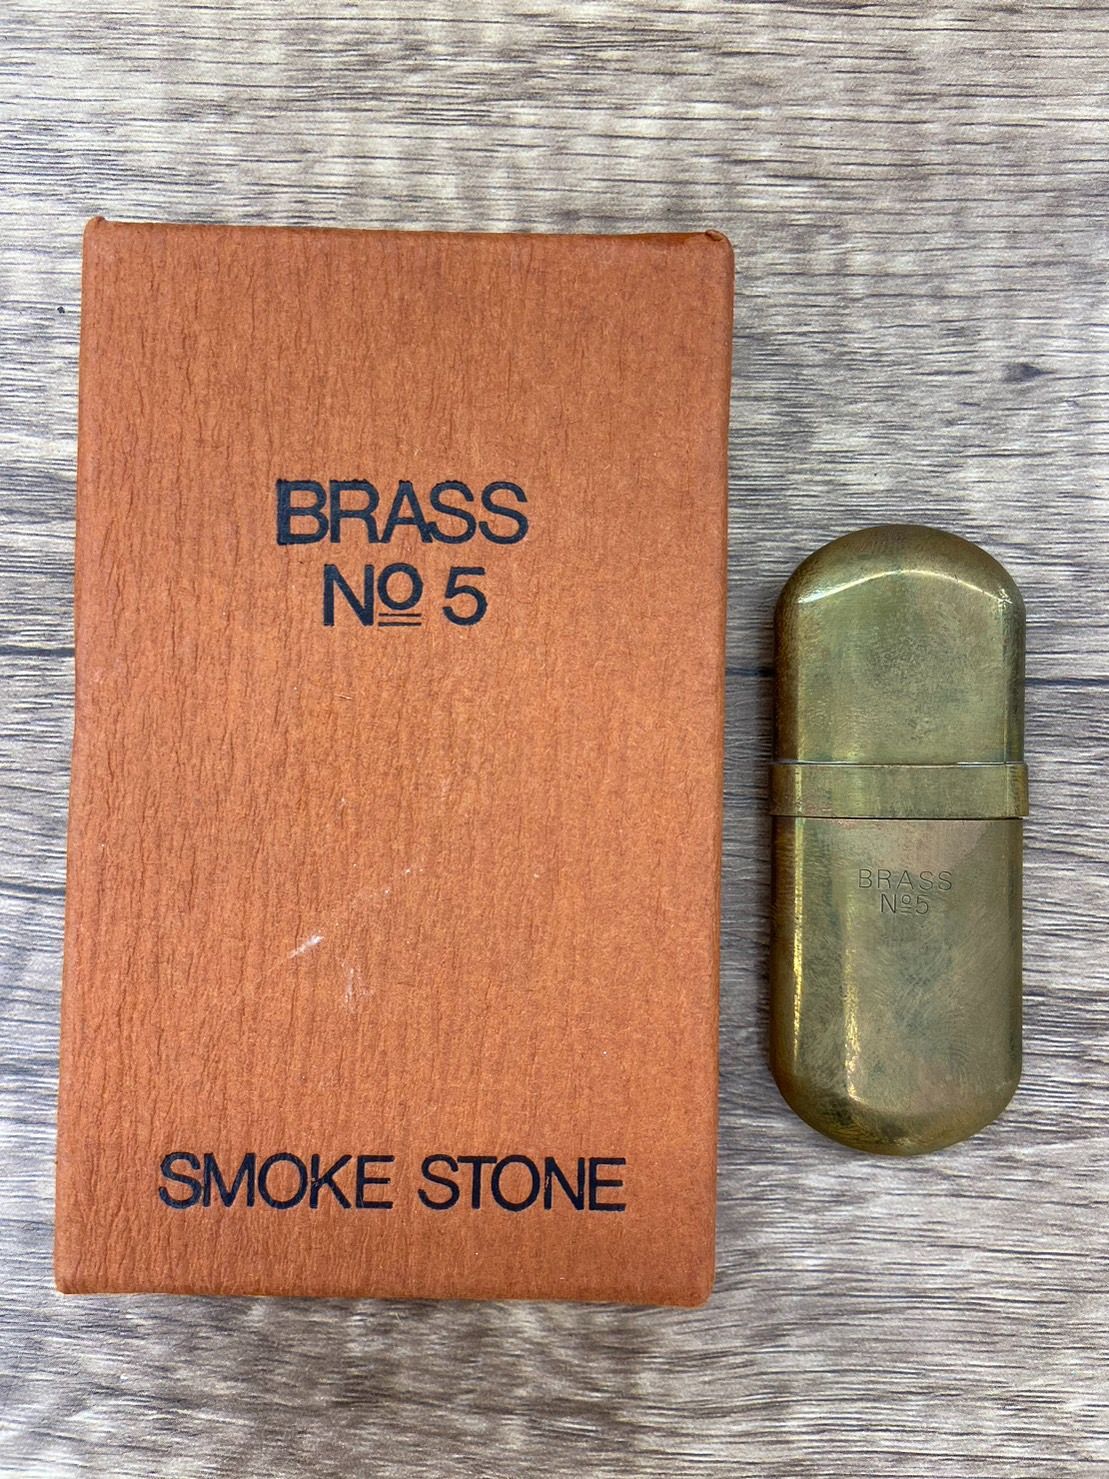 SMOKE STONE BRASS No5 真鍮製 オイルライター スモーク ストーン